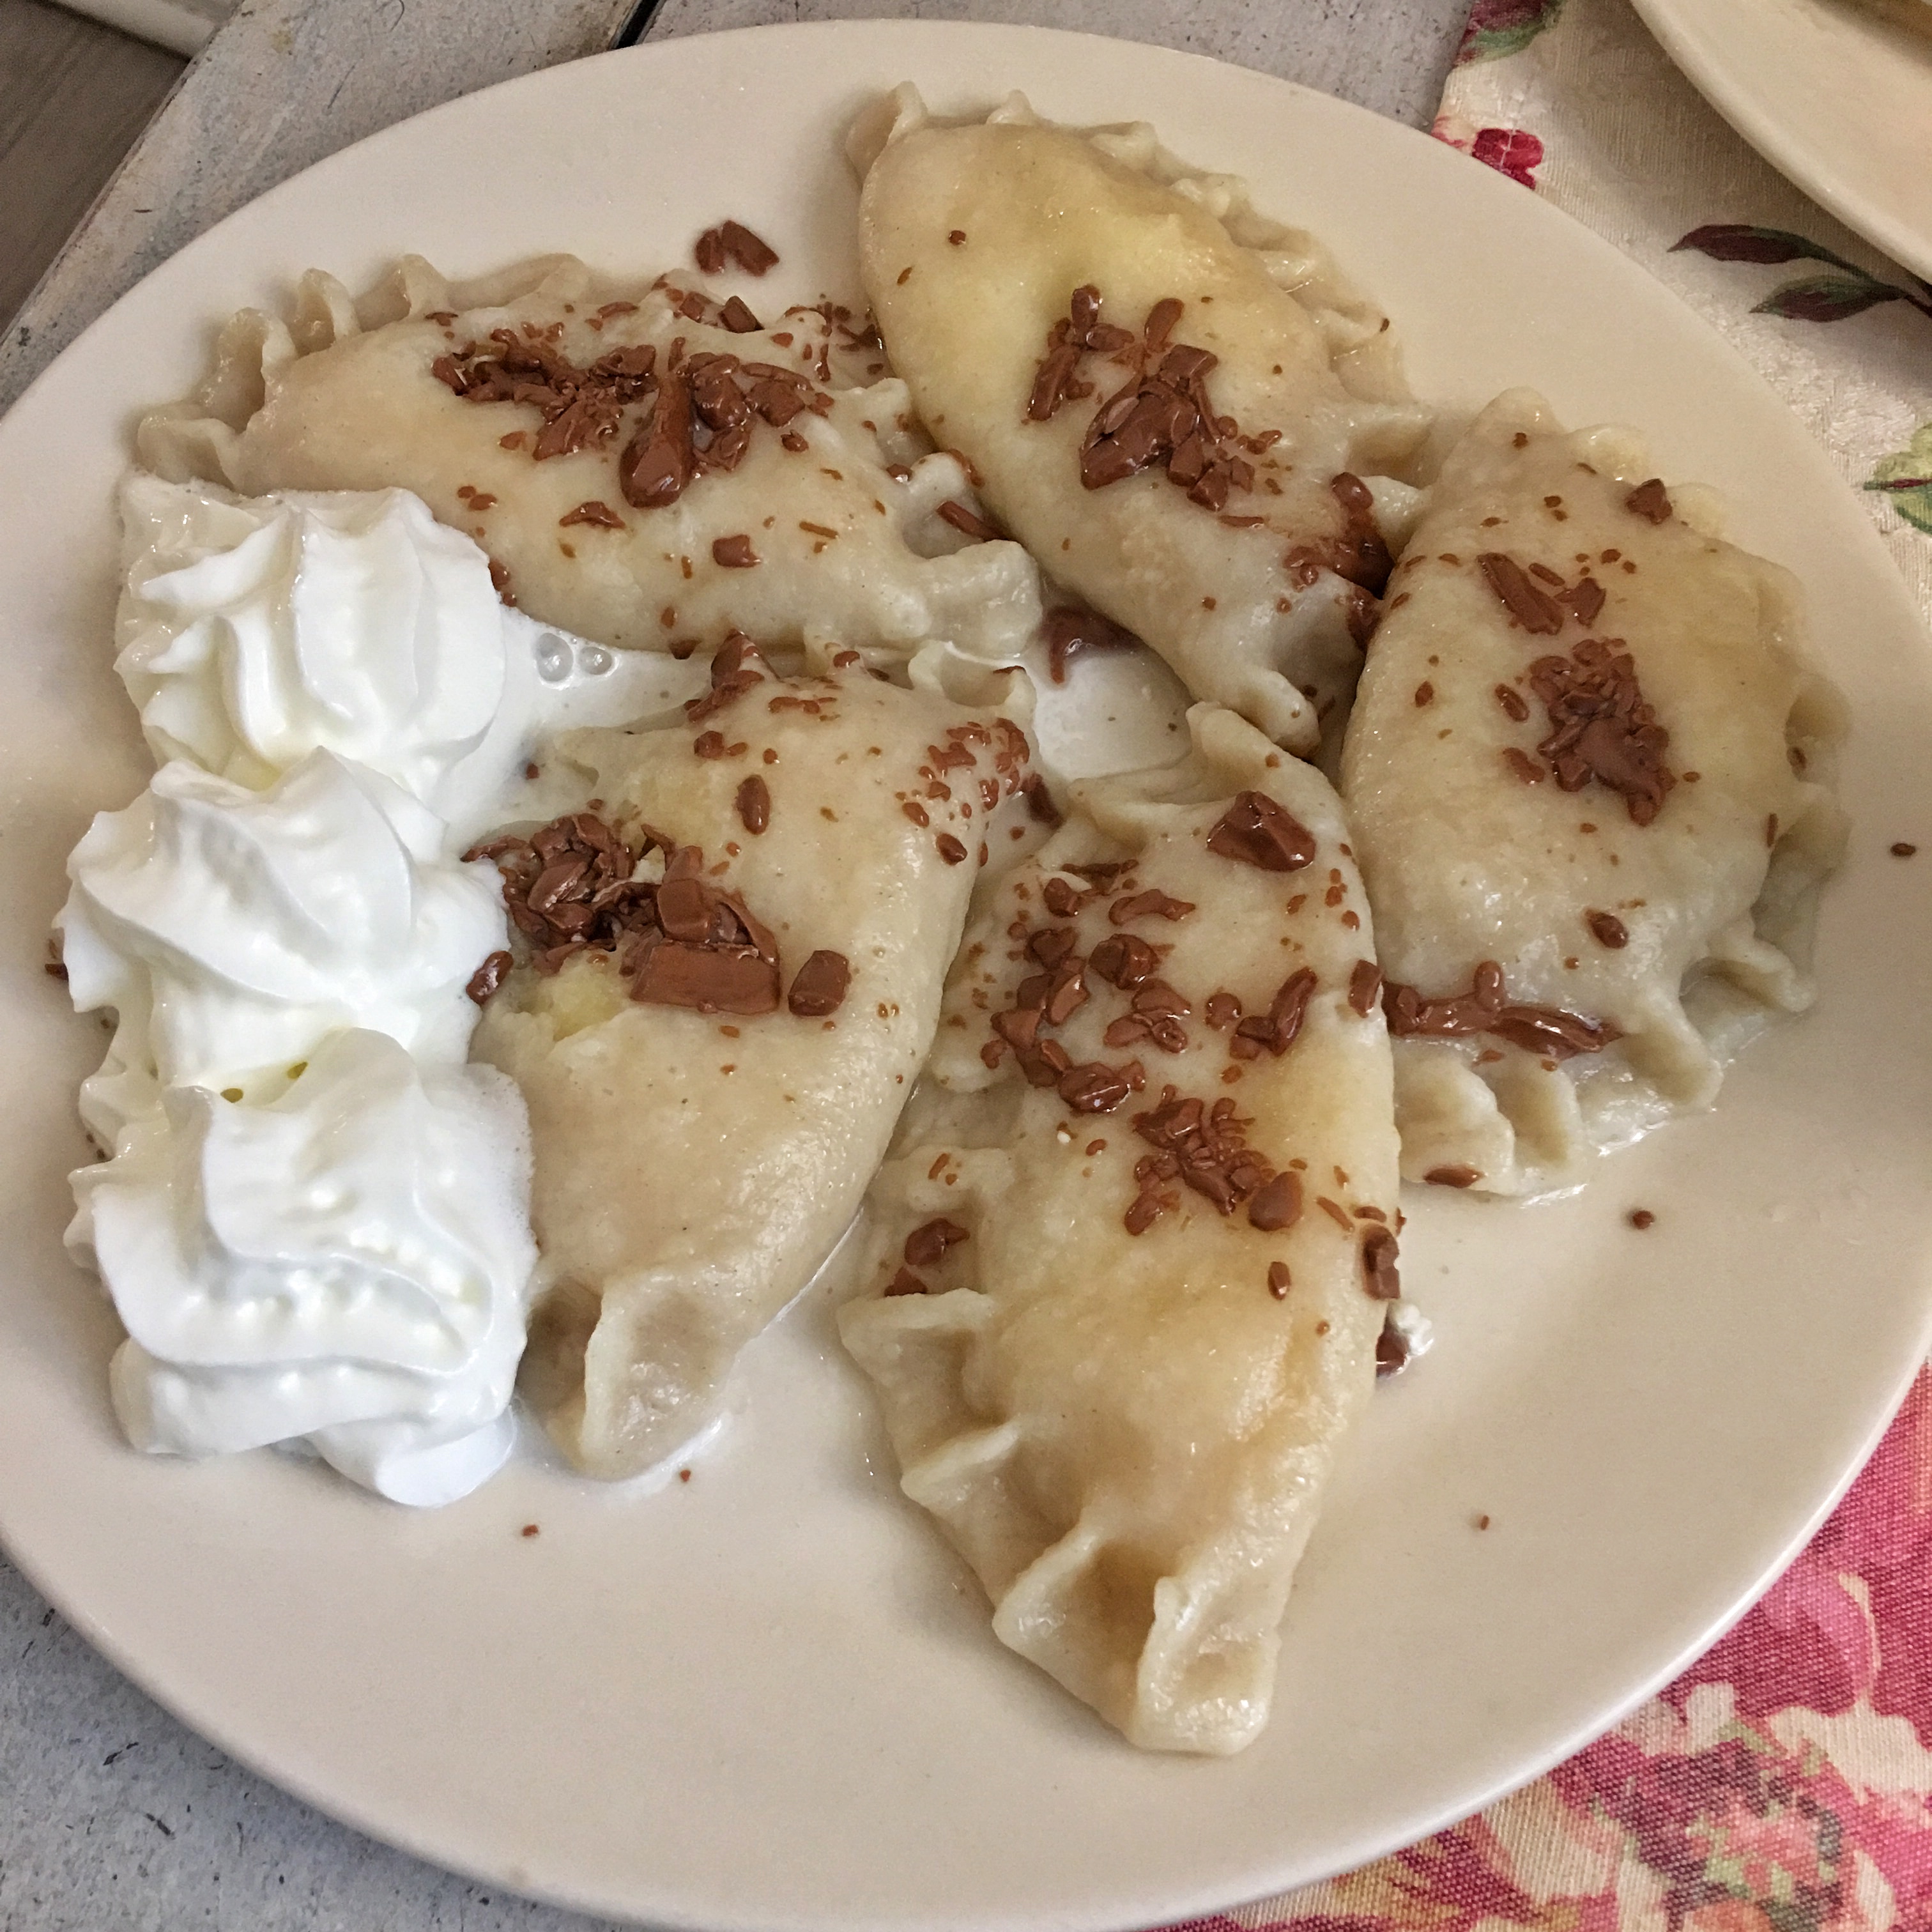 Dessert pierogies in Poznan